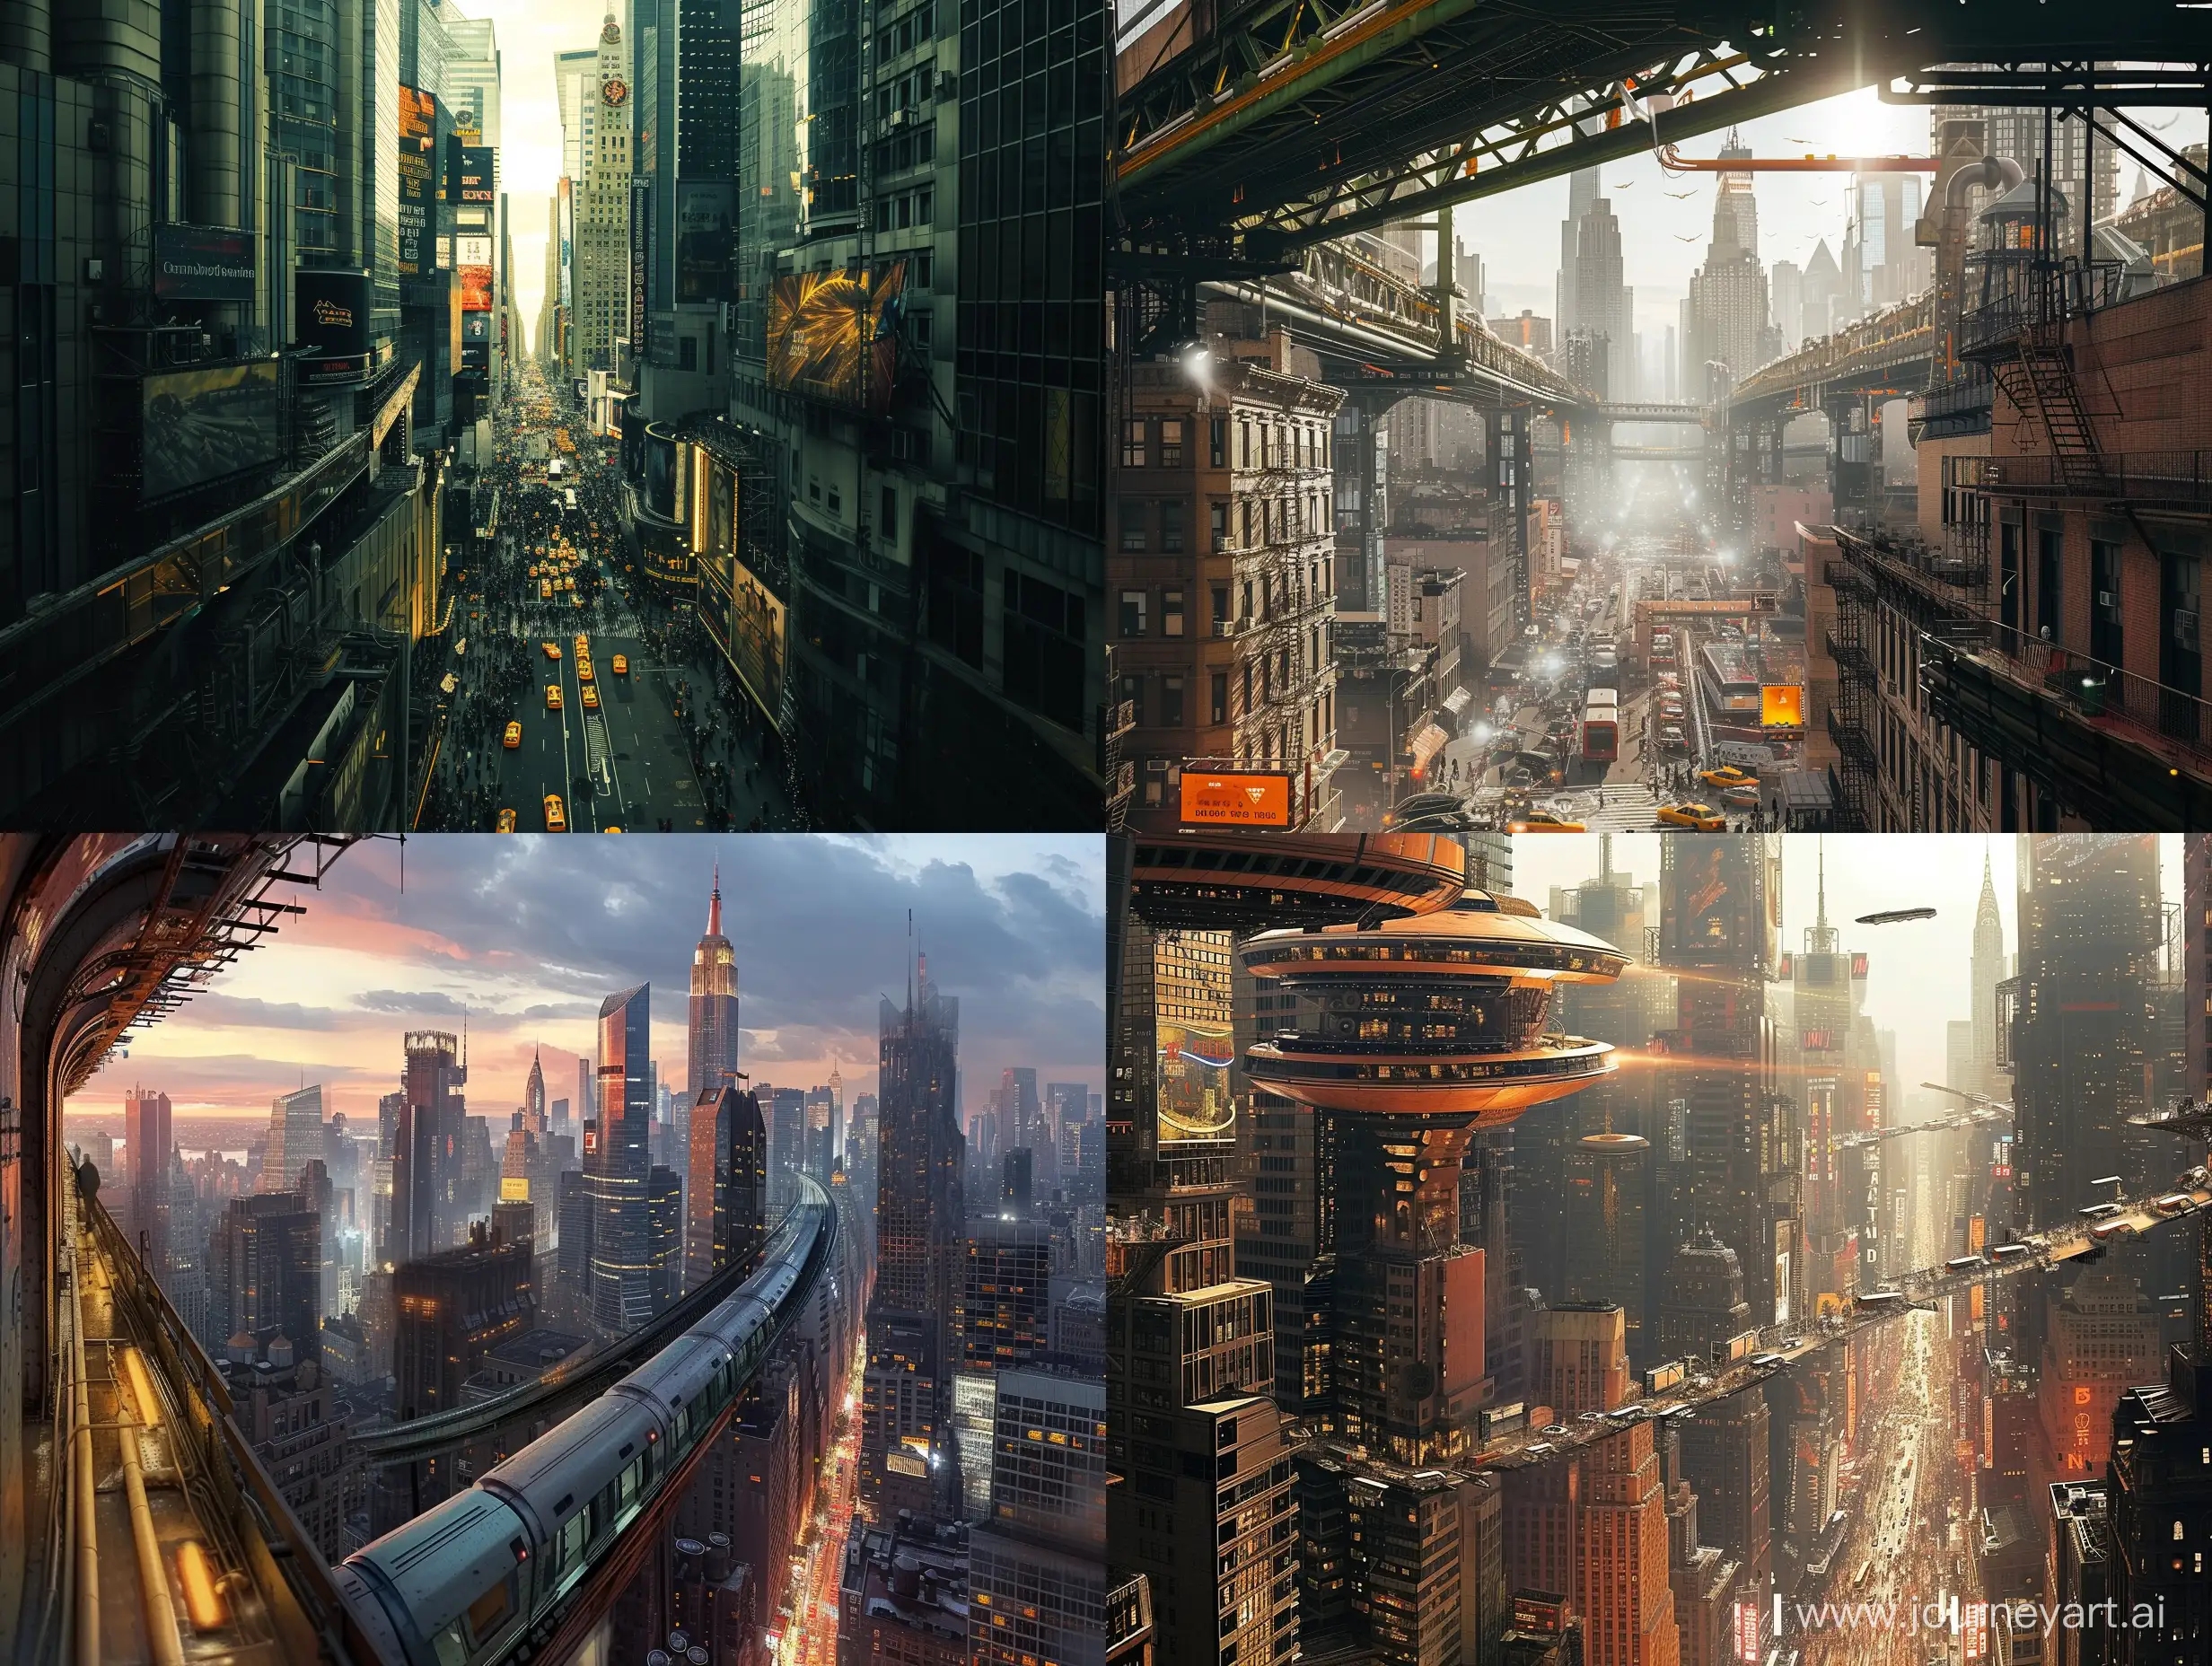 Futuristic-Urban-Splendor-Vibrant-New-York-City-Skyline-in-SciFi-Glory